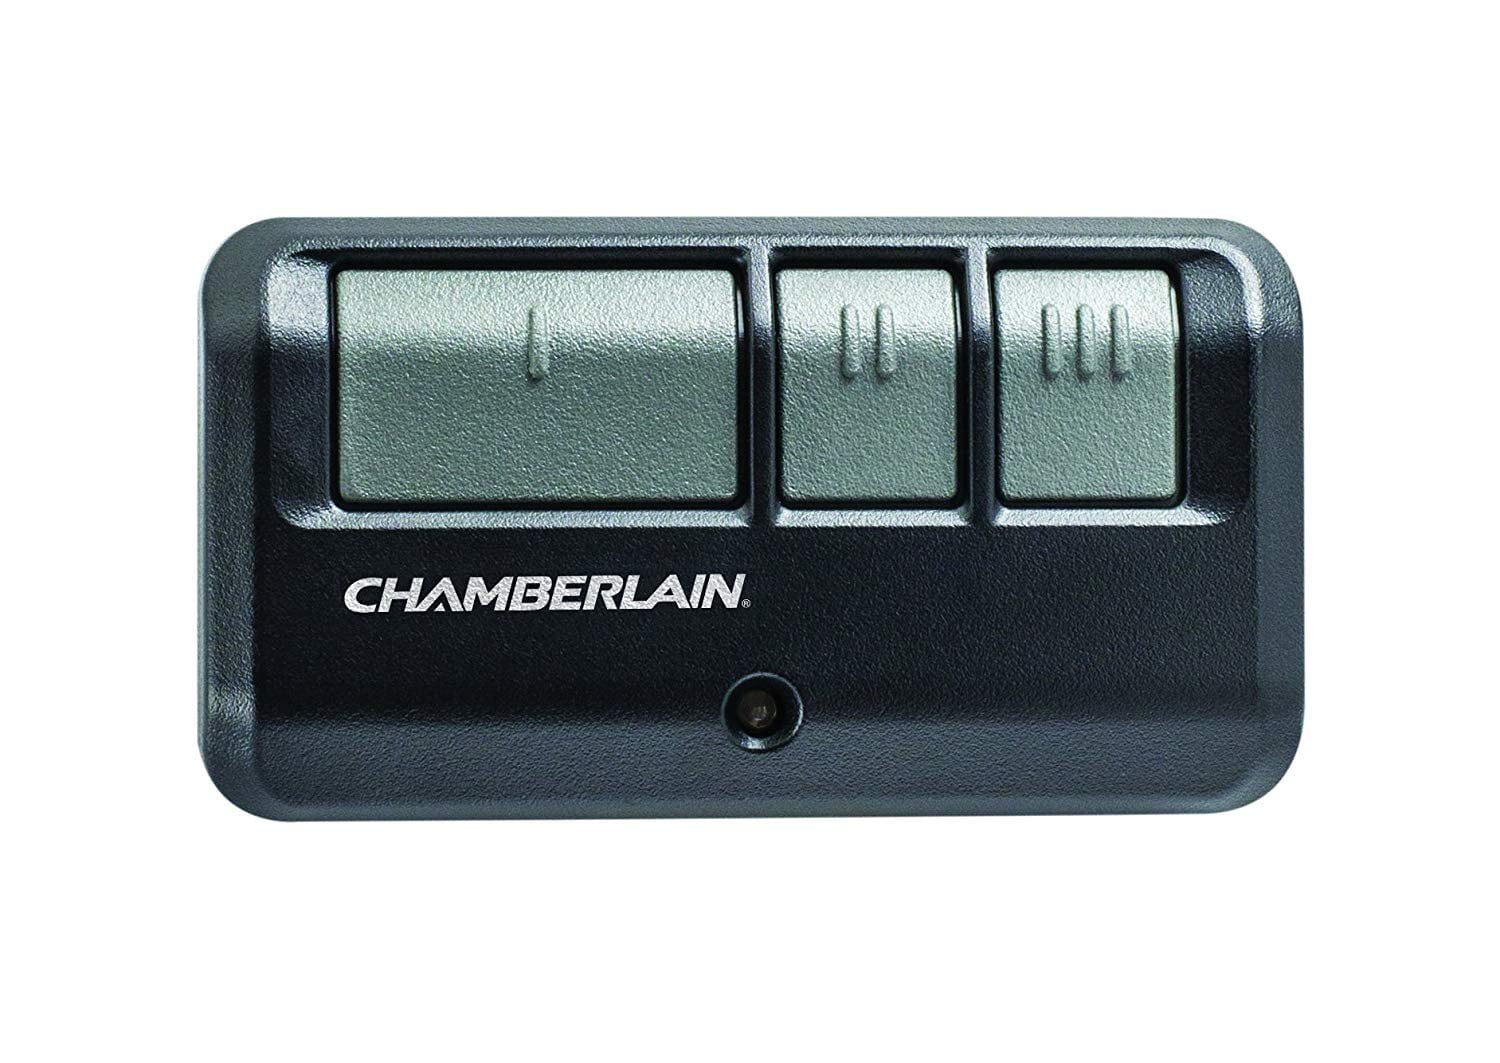 How To Program Chamberlain Garage Remote To Liftmaster